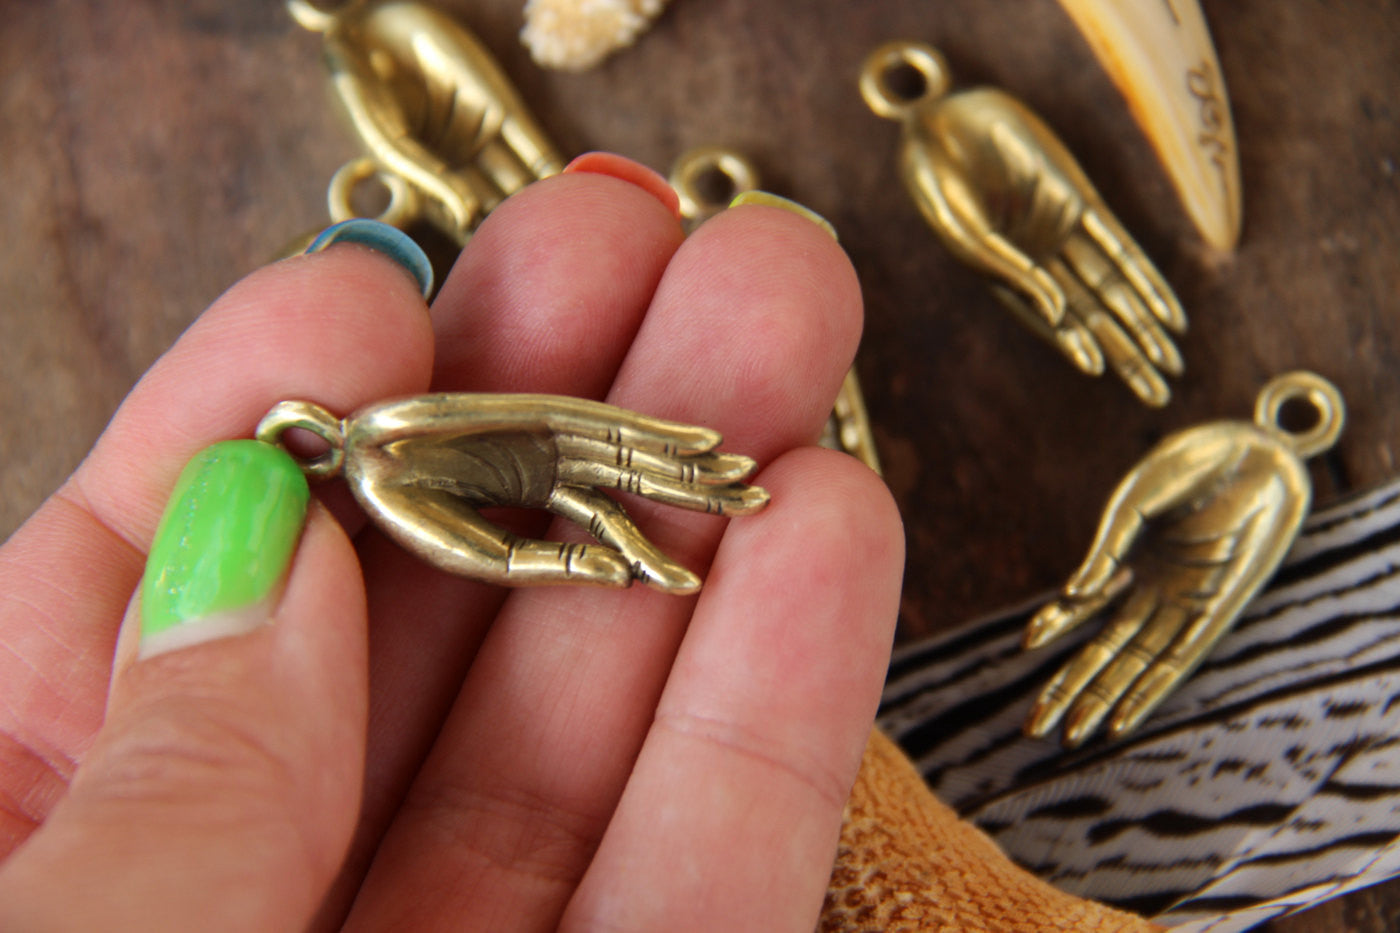 Gyan Mudra Golden Brass Pendant, 1 Himalayan Hand Gesture Pendant, Buddhist, Yoga, Meditation, Spiritual Jewelry Making Supplies, 1 Pendant - ShopWomanShopsWorld.com. Bone Beads, Tassels, 